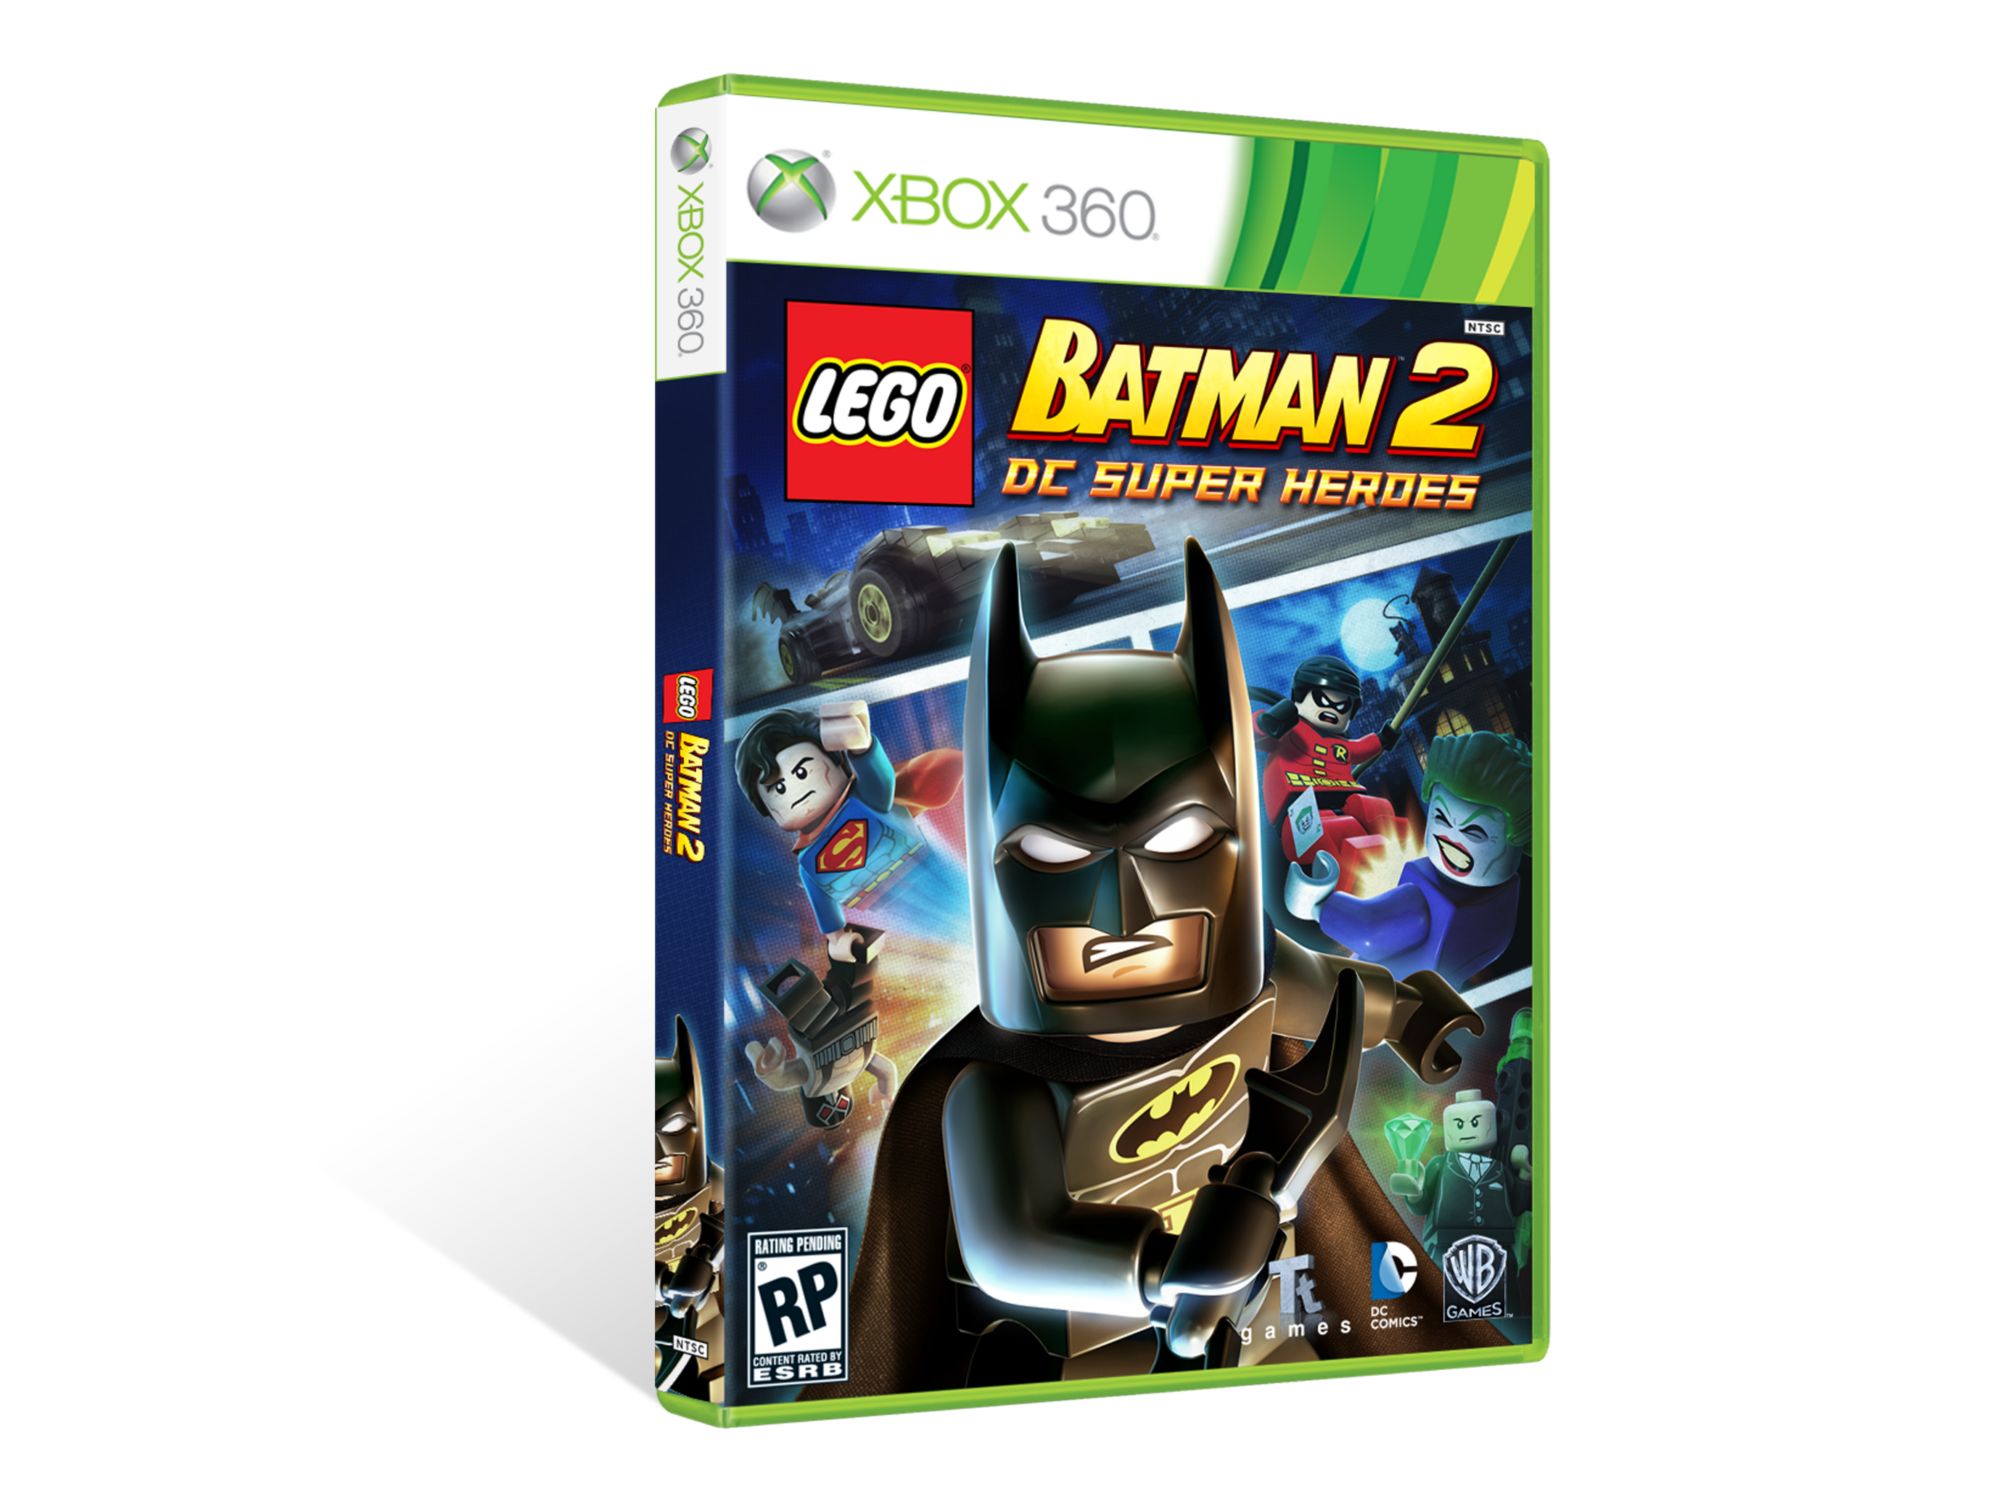 Batman xbox. LEGO Batman 2 DC super Heroes Xbox 360. Лего Бэтмен хвох 360. Хвох 360 лего Бэтмен 2. Диск xbox360 Pure+ LEGO Batman.